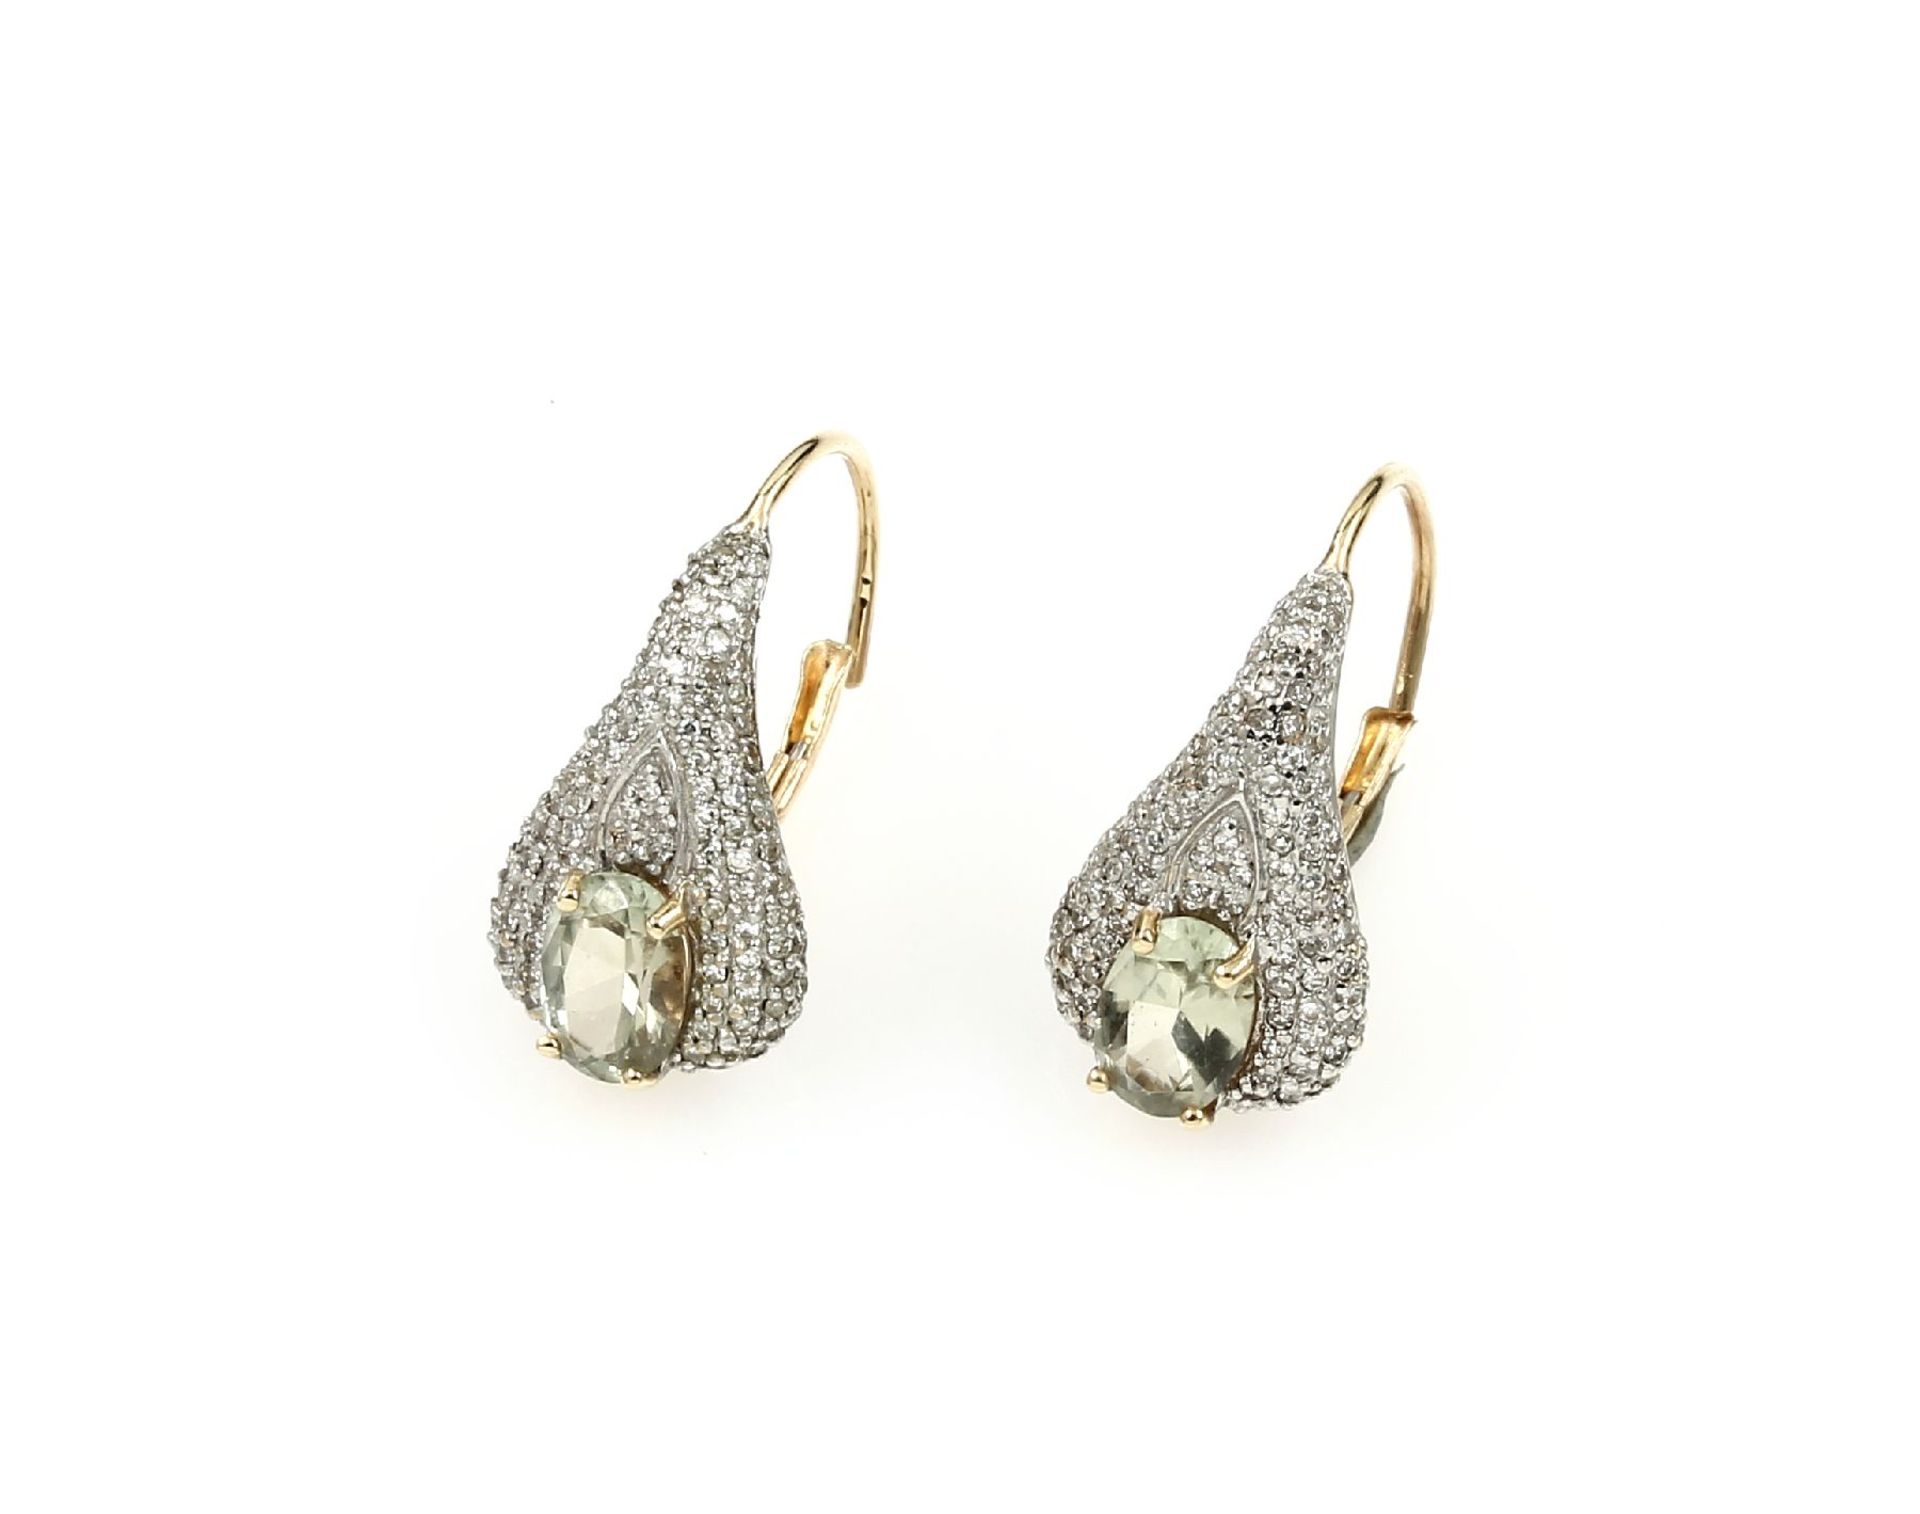 Pair of 14 kt gold earrings with zultanites and diamonds , YG/WG 585/000, 2 oval bevelled zultanites